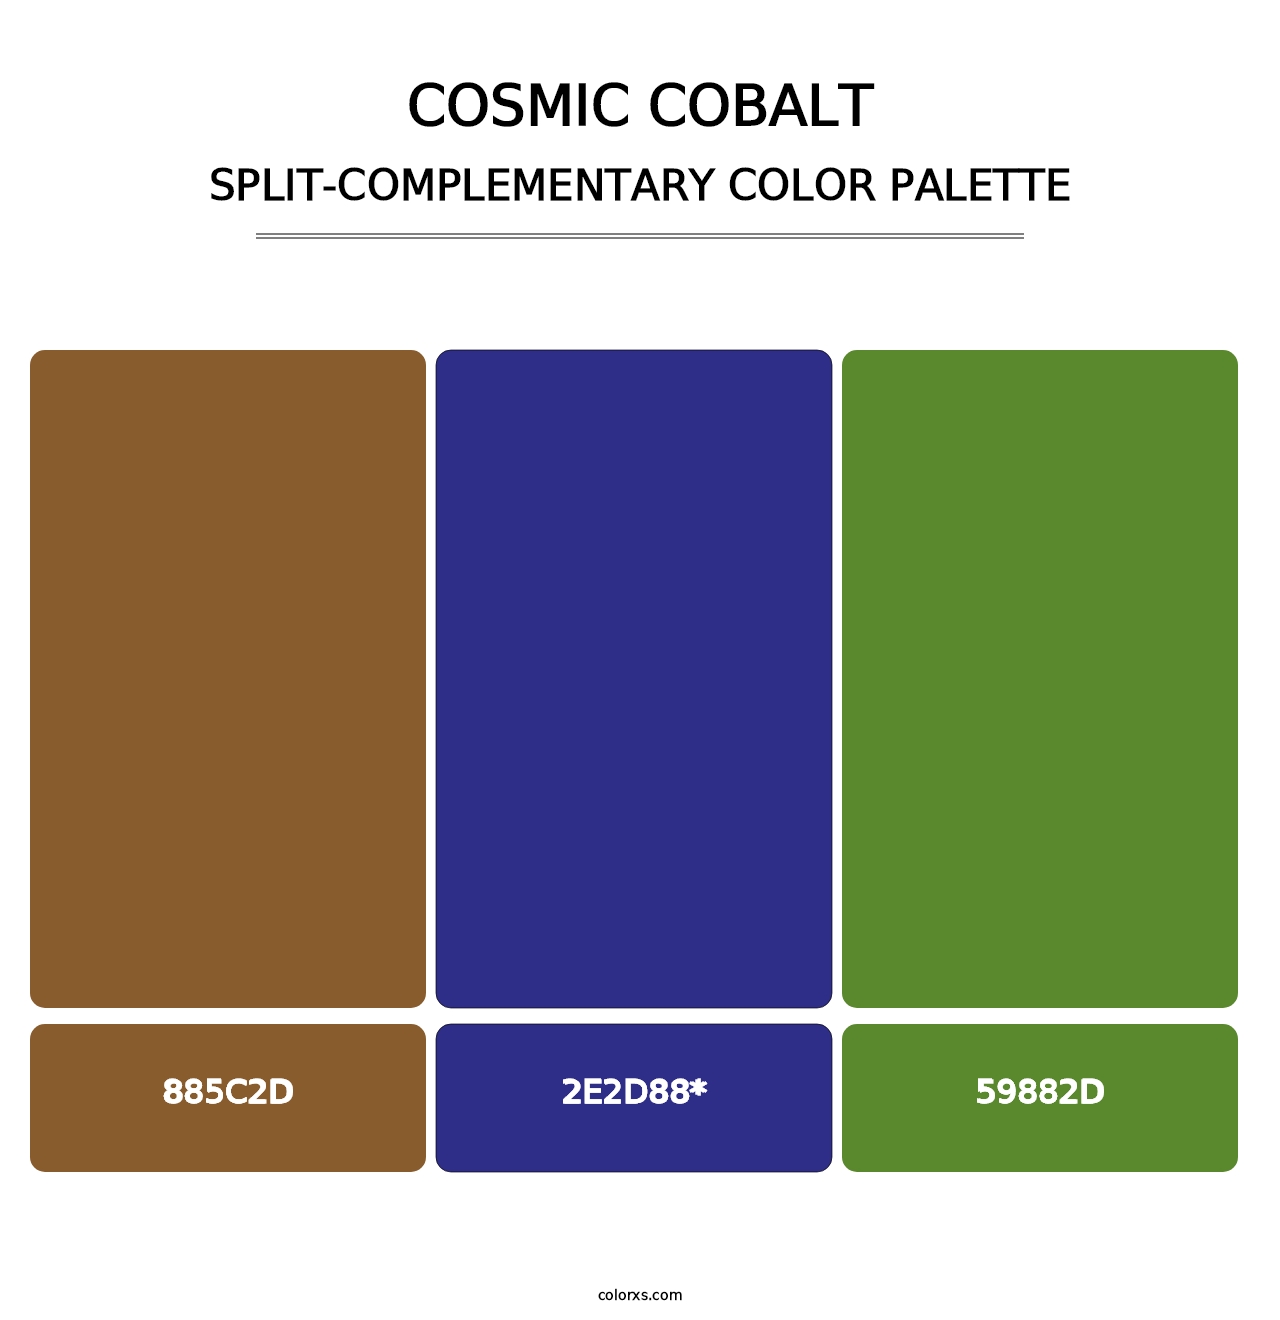 Cosmic Cobalt - Split-Complementary Color Palette